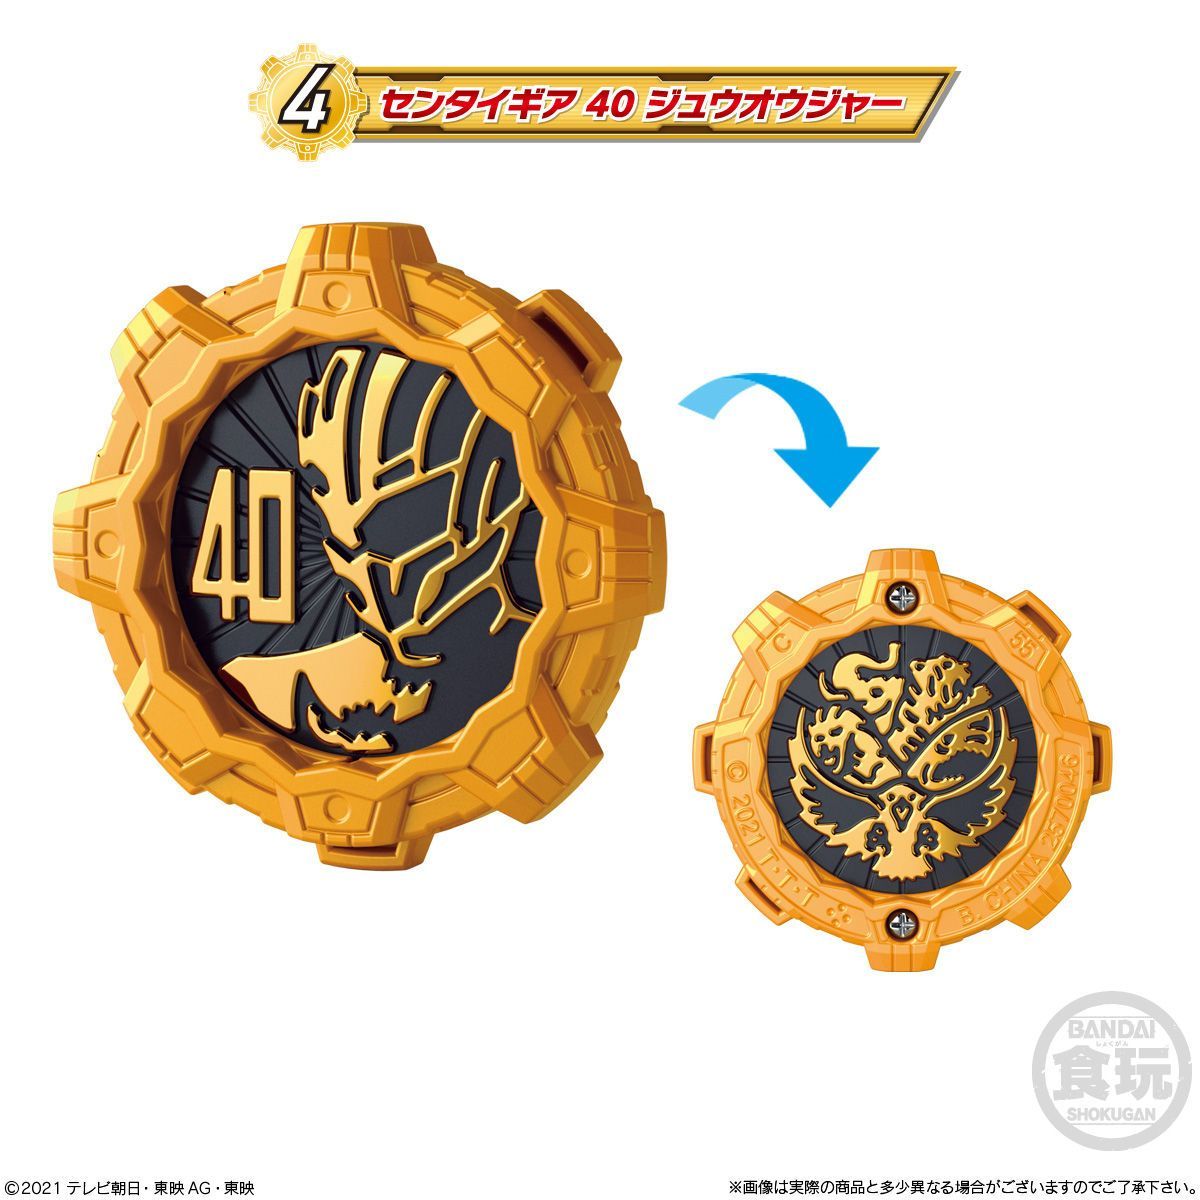 [LOOSE] Kikai Sentai Zenkaiger: Candy Toy SG Sentai Gear 03 - 04. #40 Zyuohger Gear | CSTOYS INTERNATIONAL